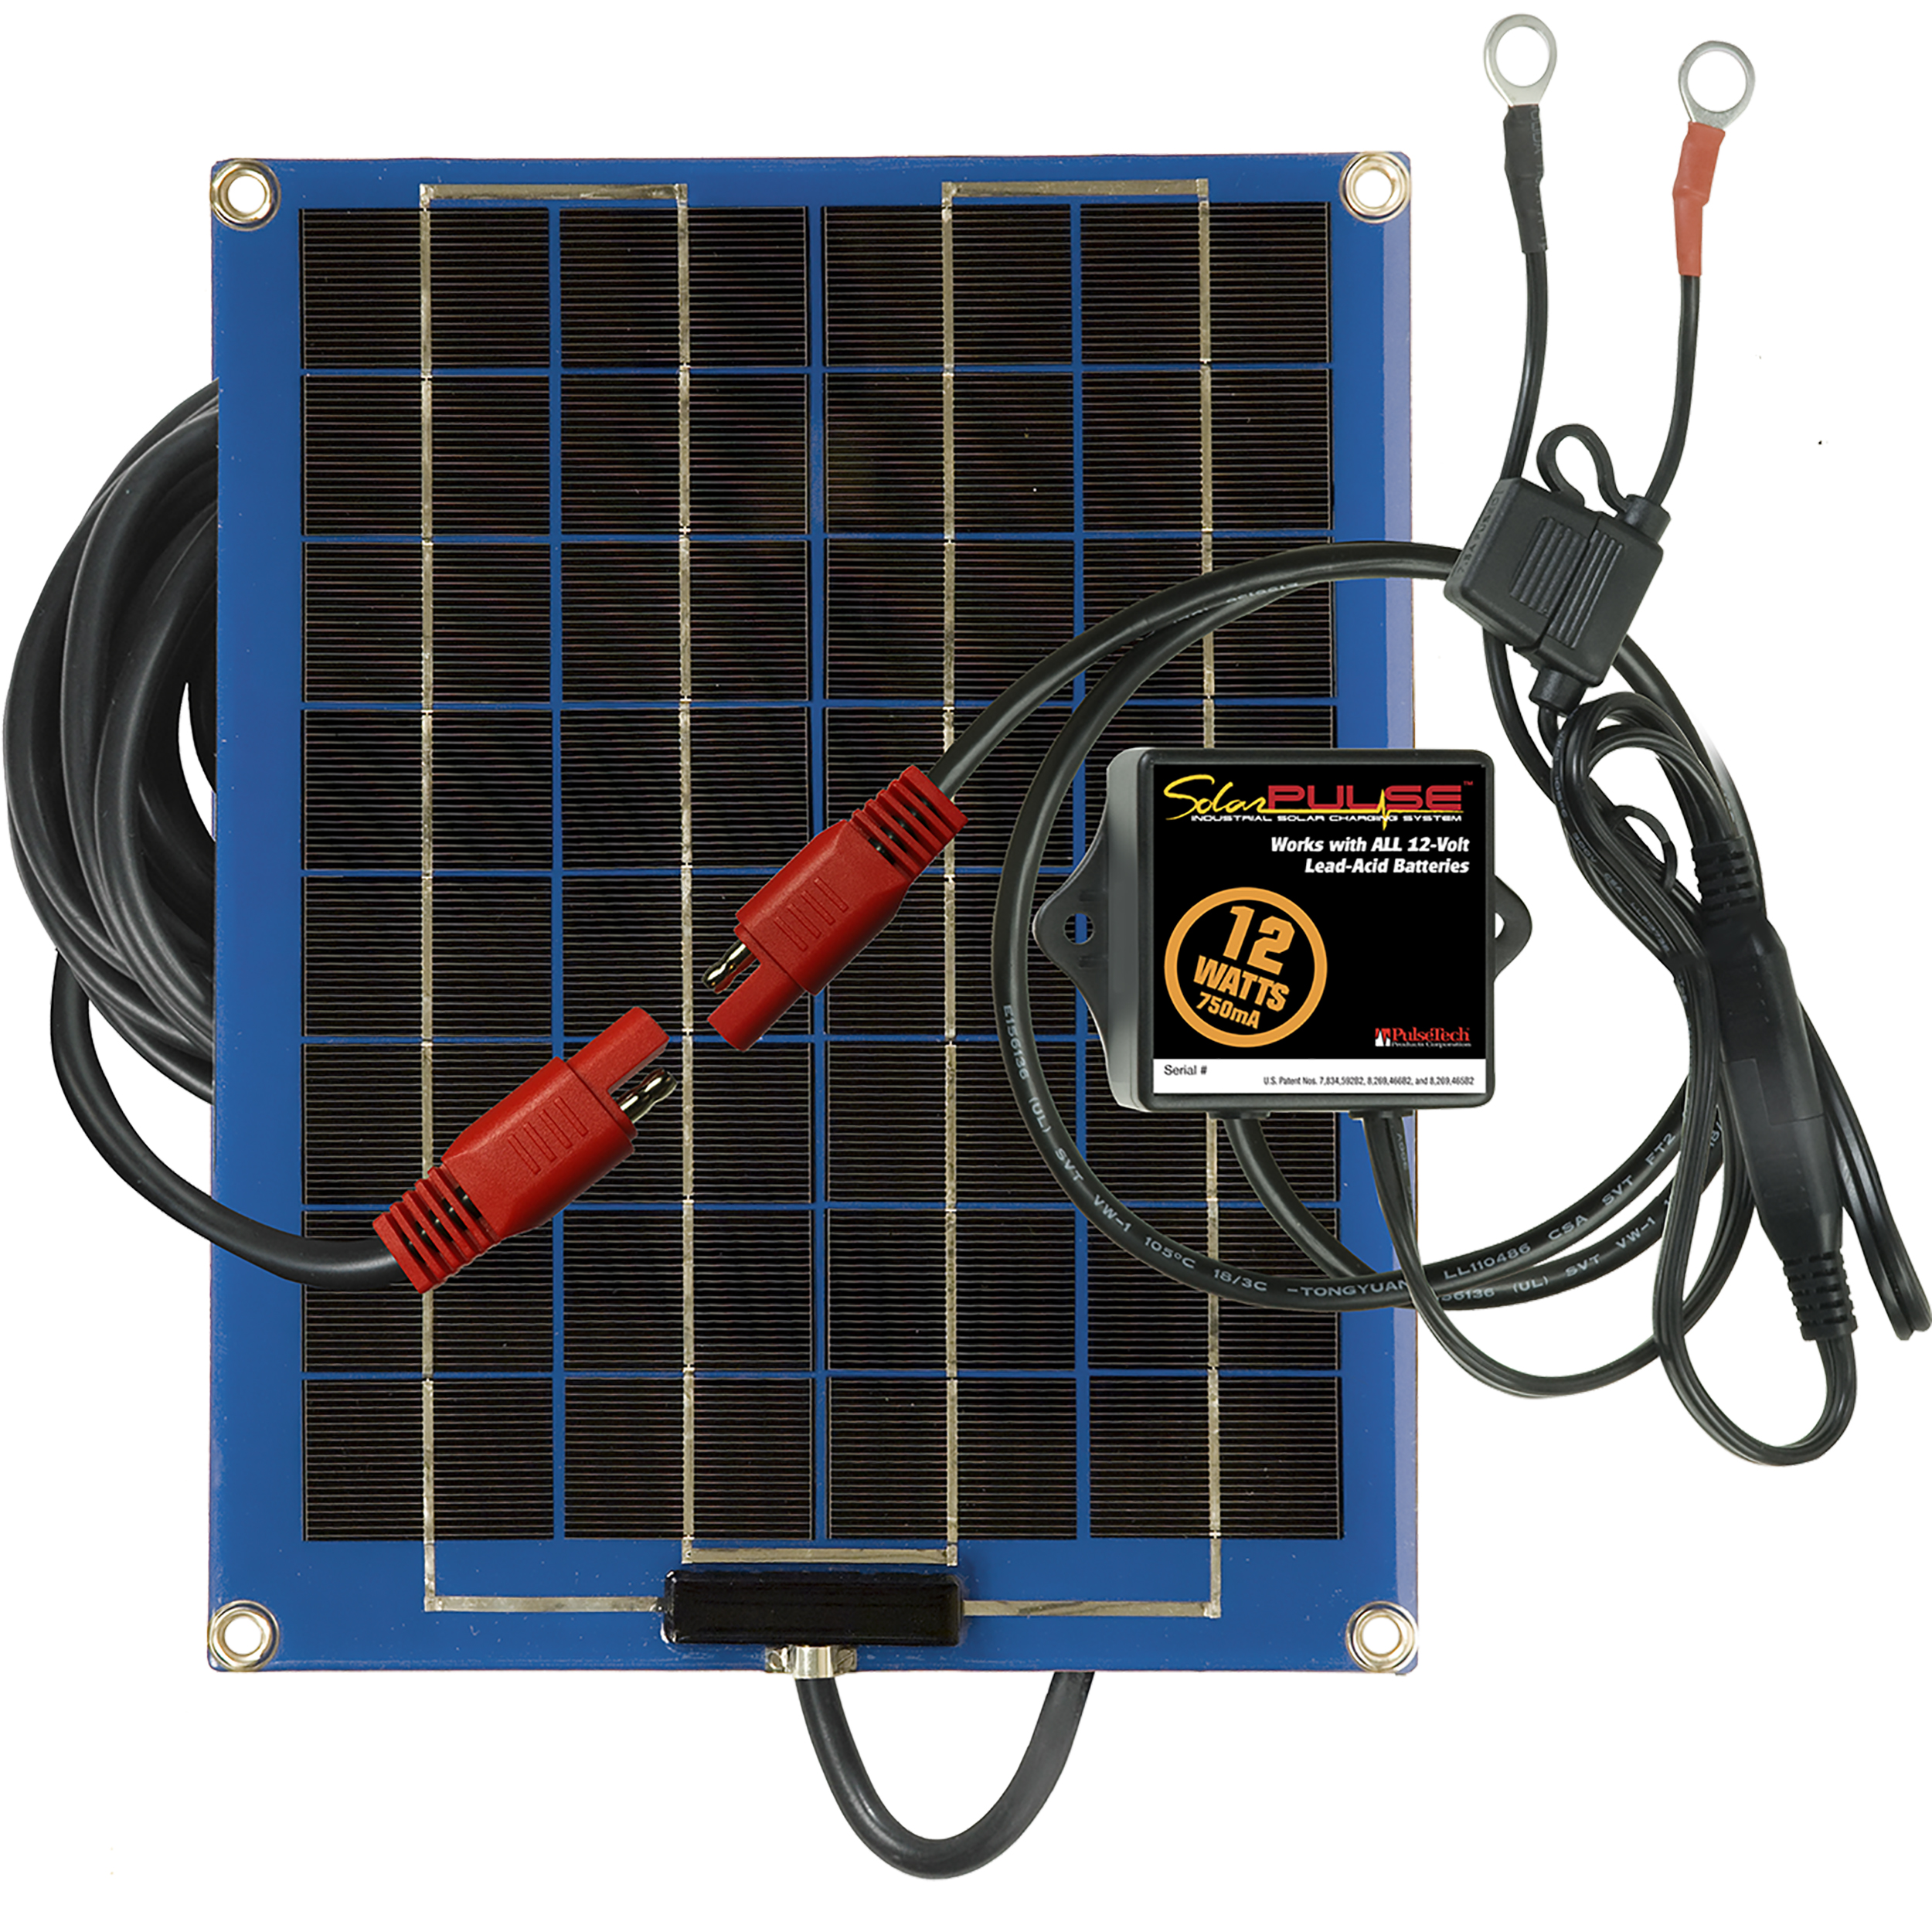 PulseTech SP-12 Solar charging kit